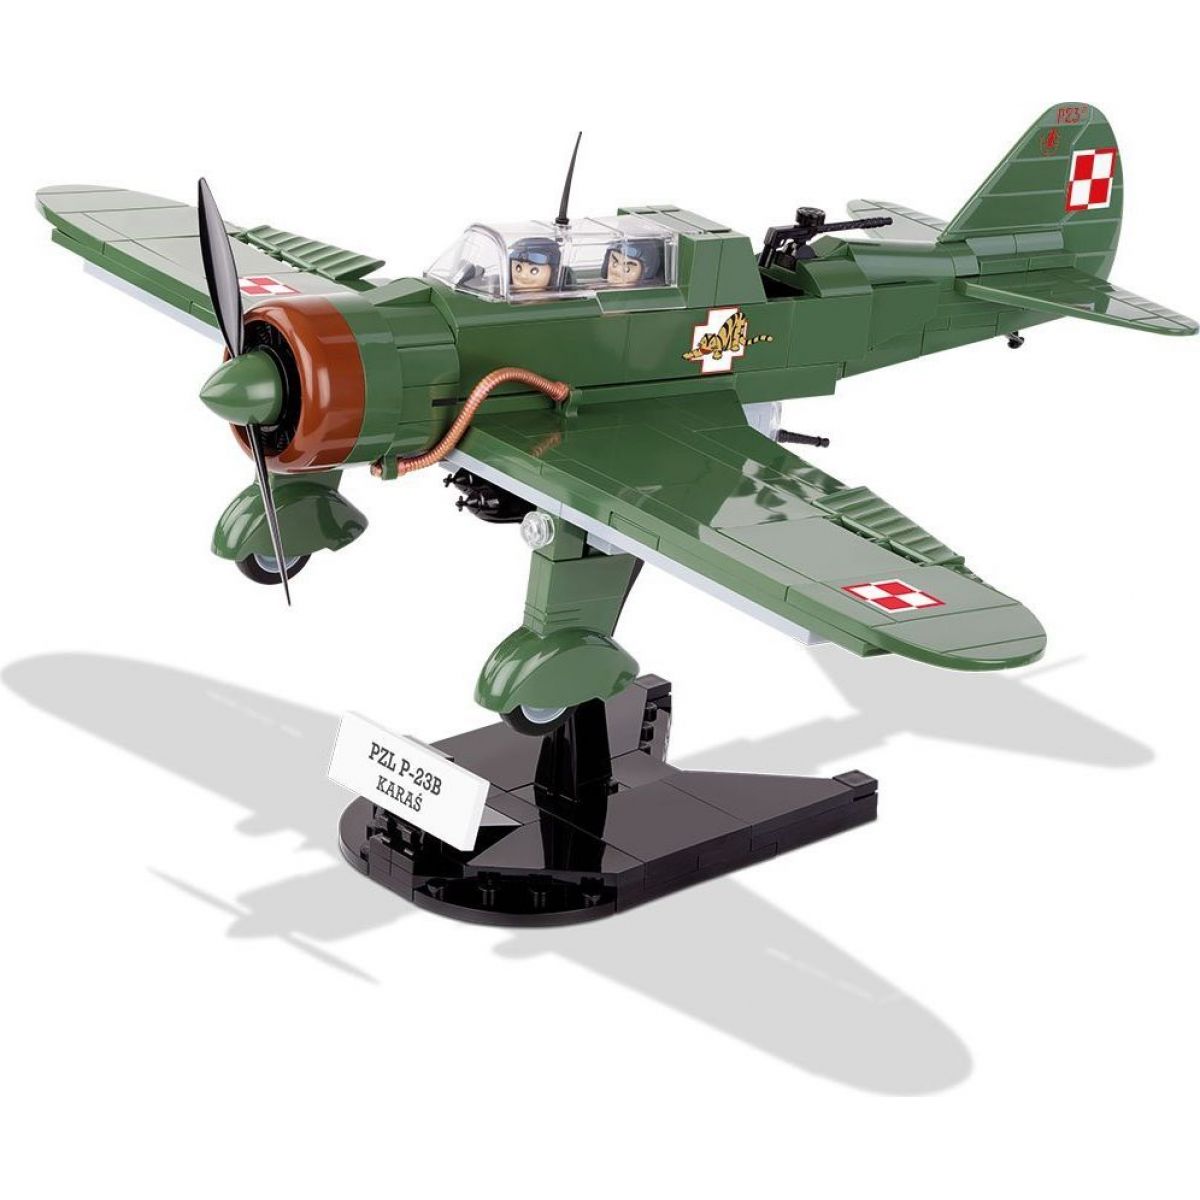 Cobi 5522 II WW PZL P-23B Karas